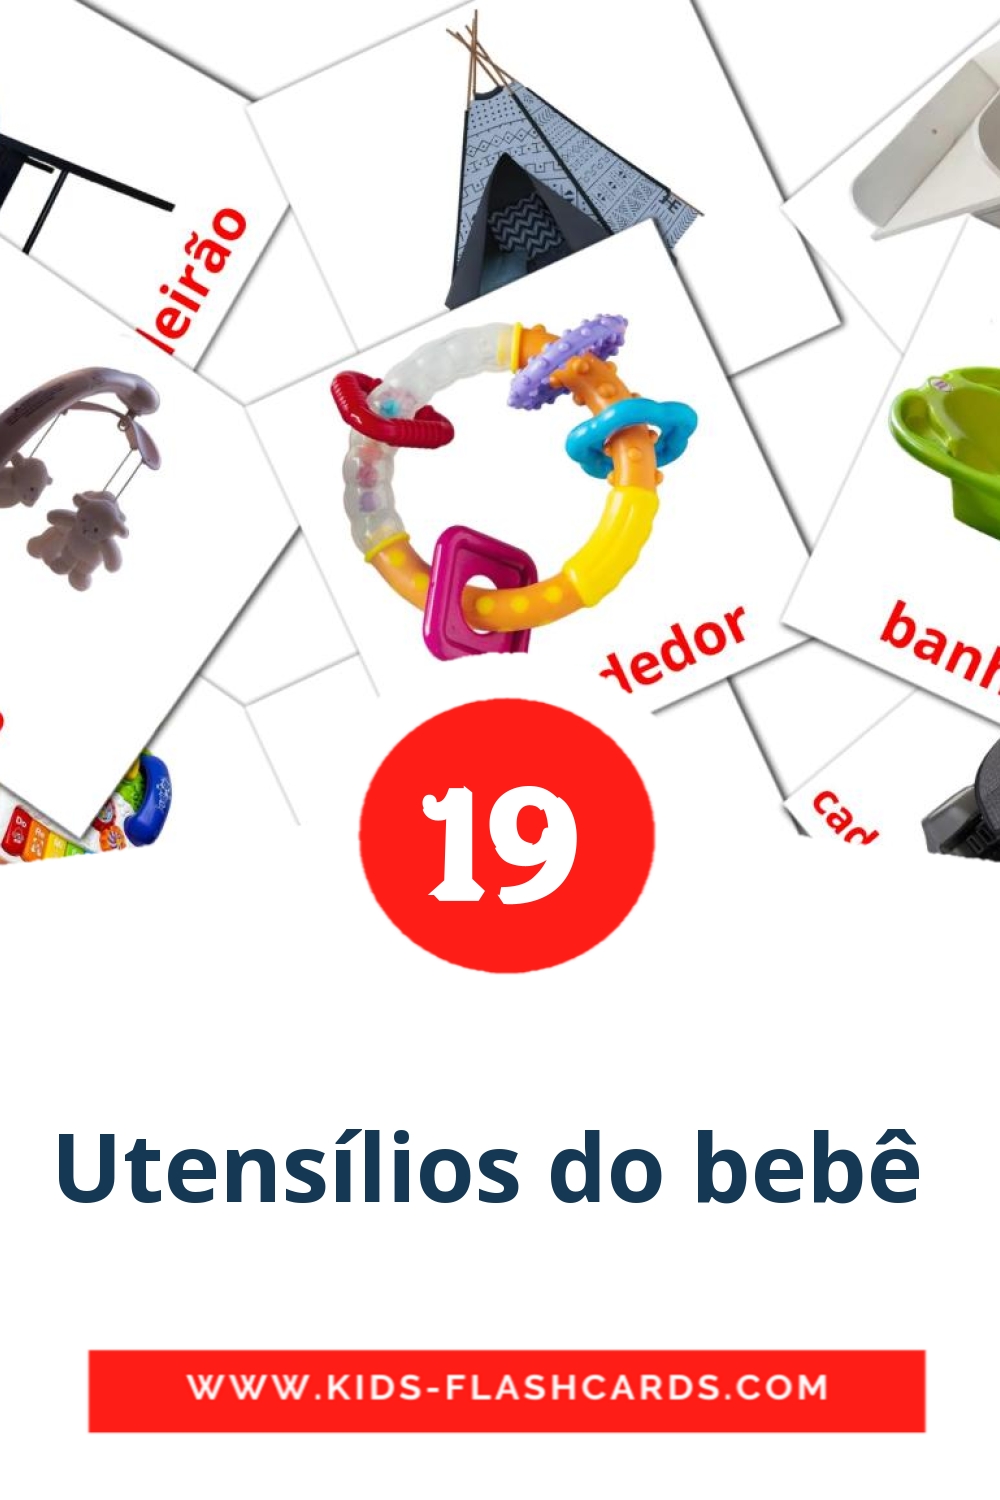 19 carte illustrate di Utensílios do bebê  per la scuola materna in amárica